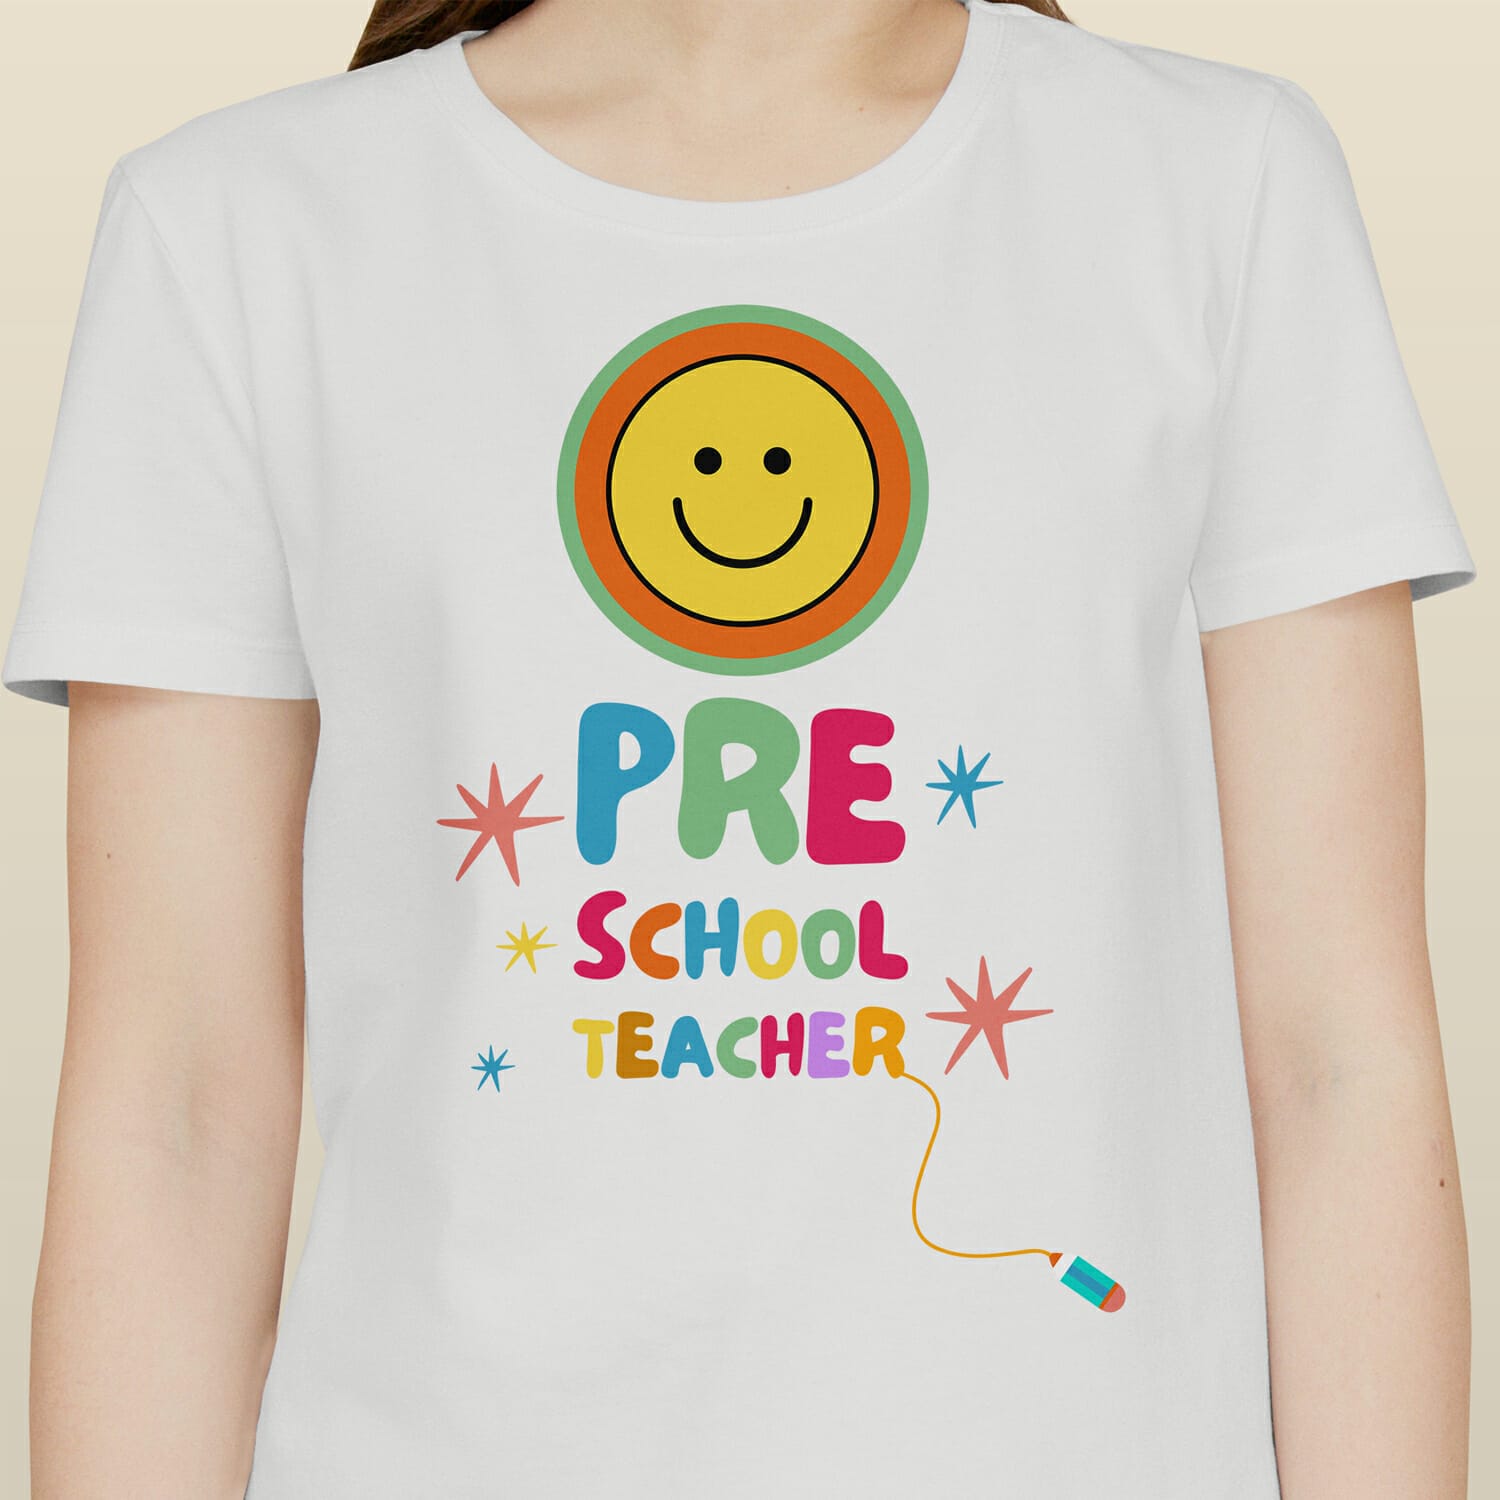 Pre-School T-Shirt Design For Teacher